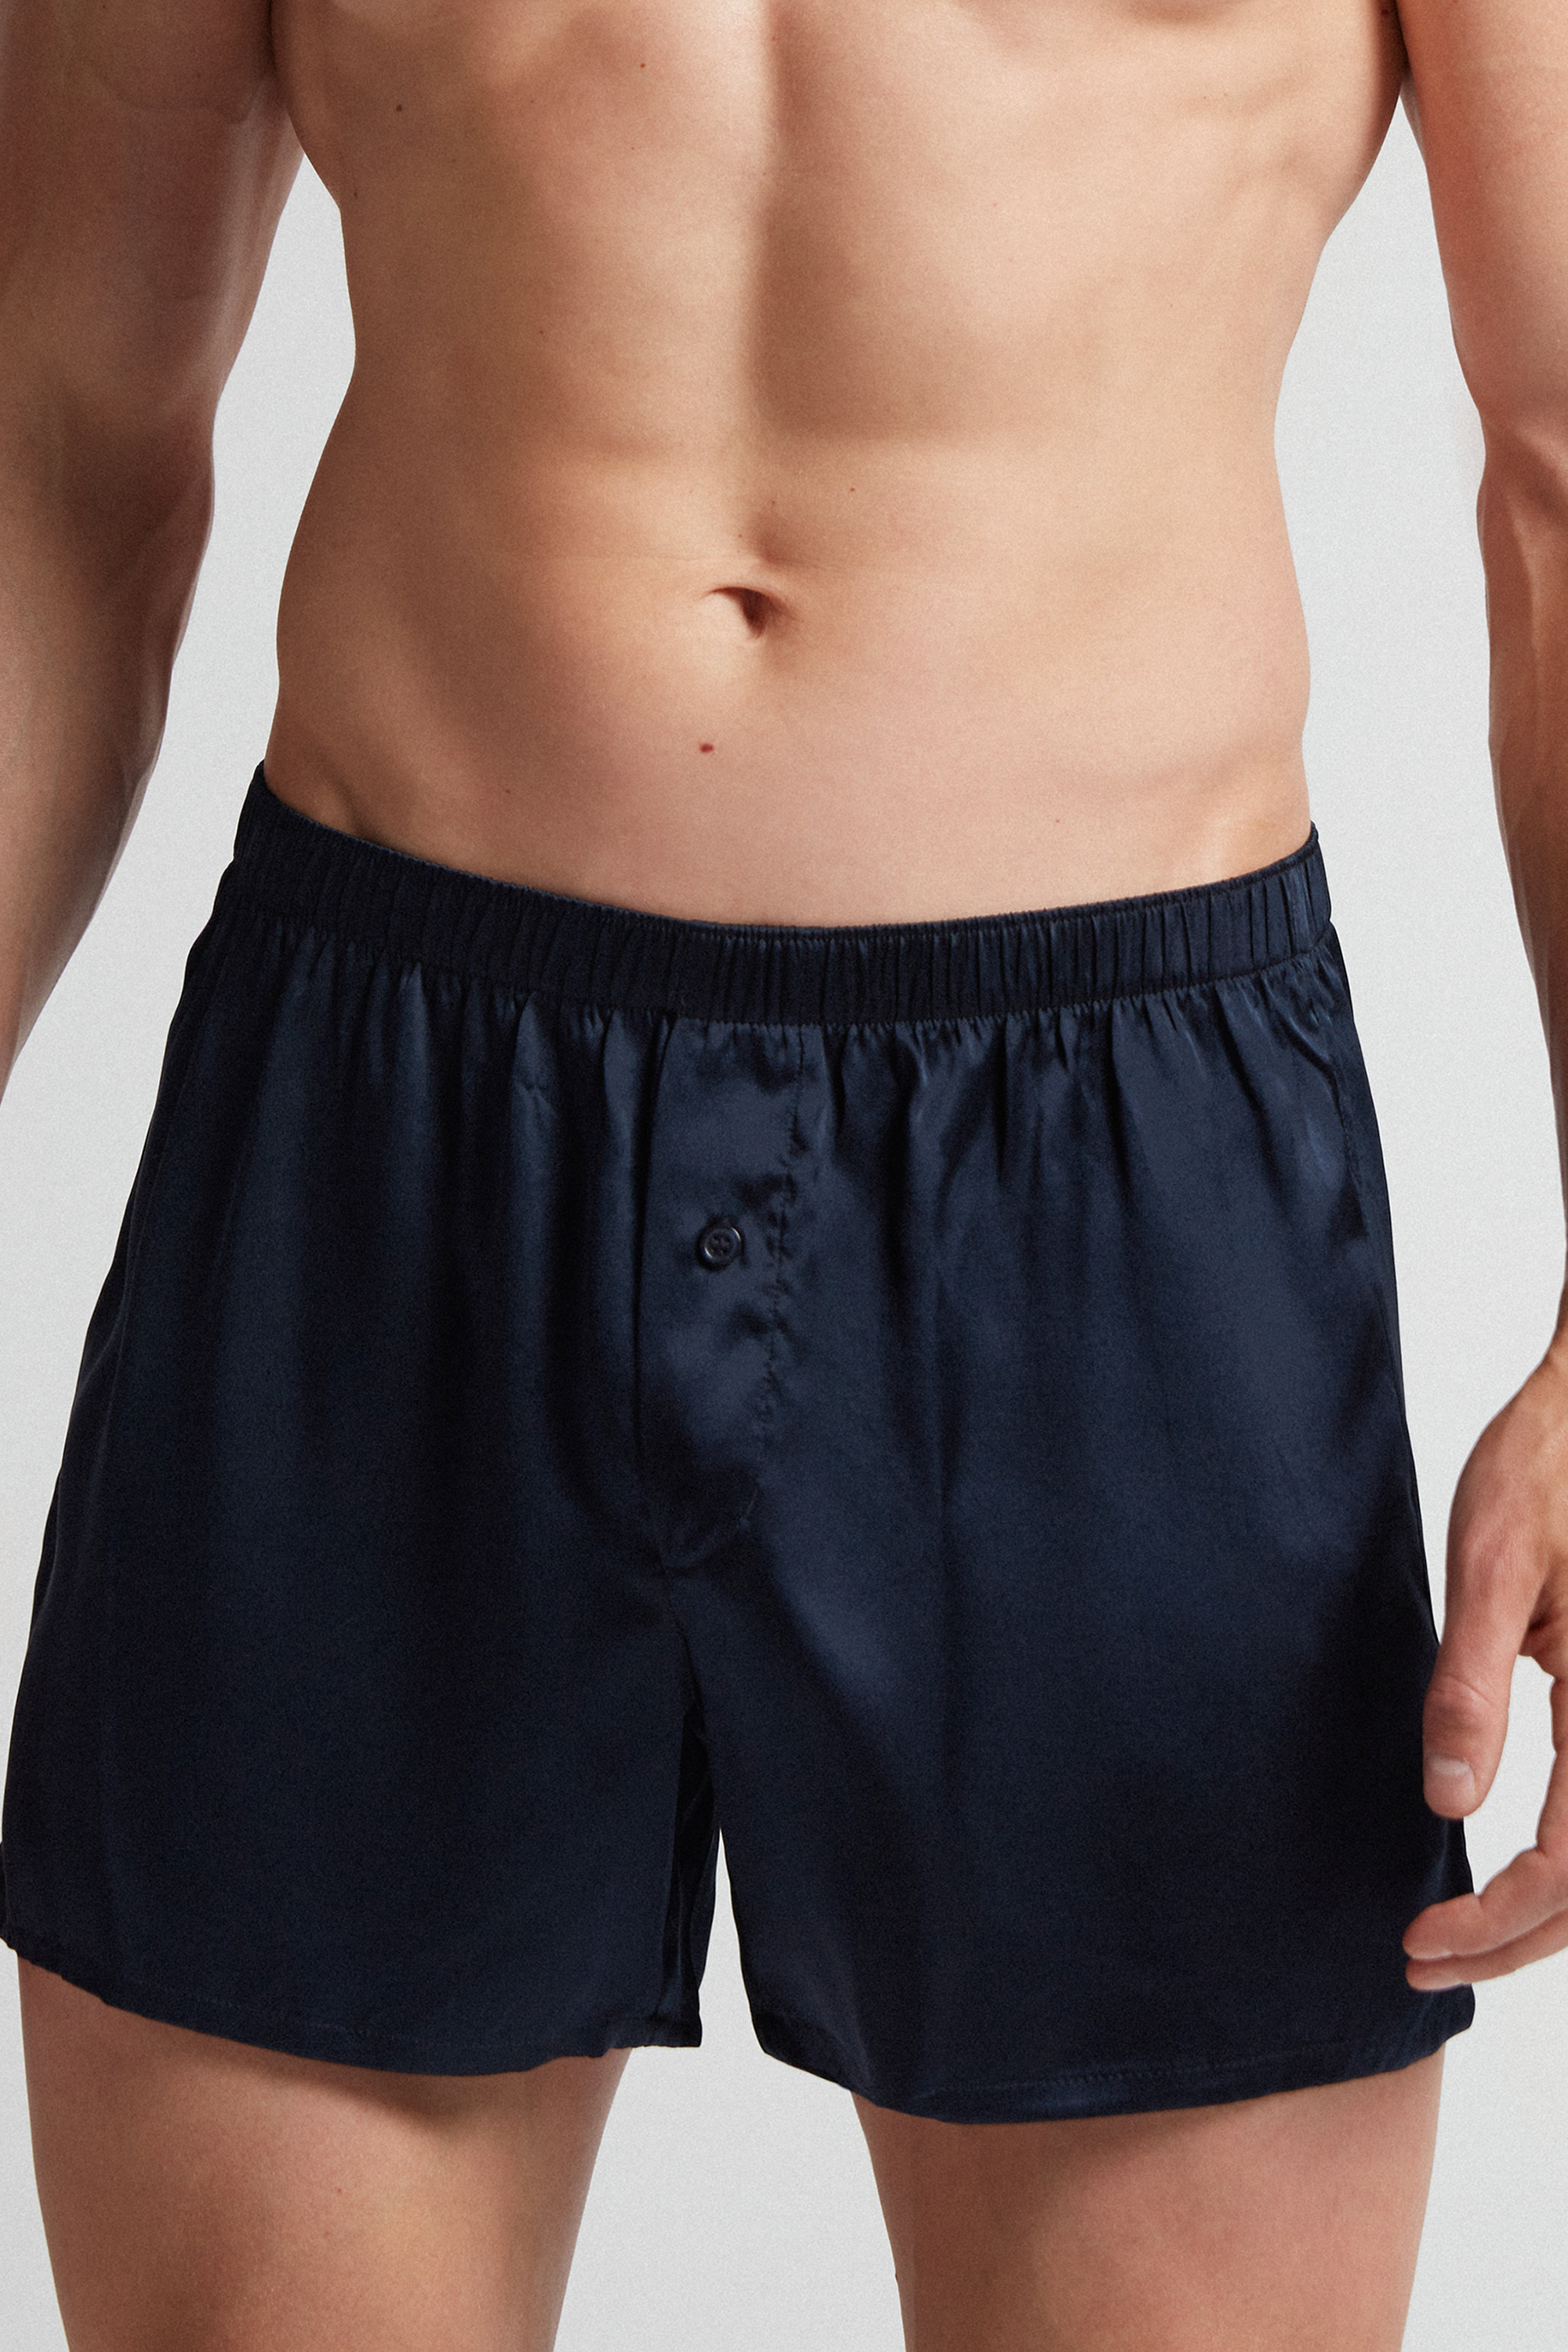 Men's Underwear Brand Opens Virtual Store